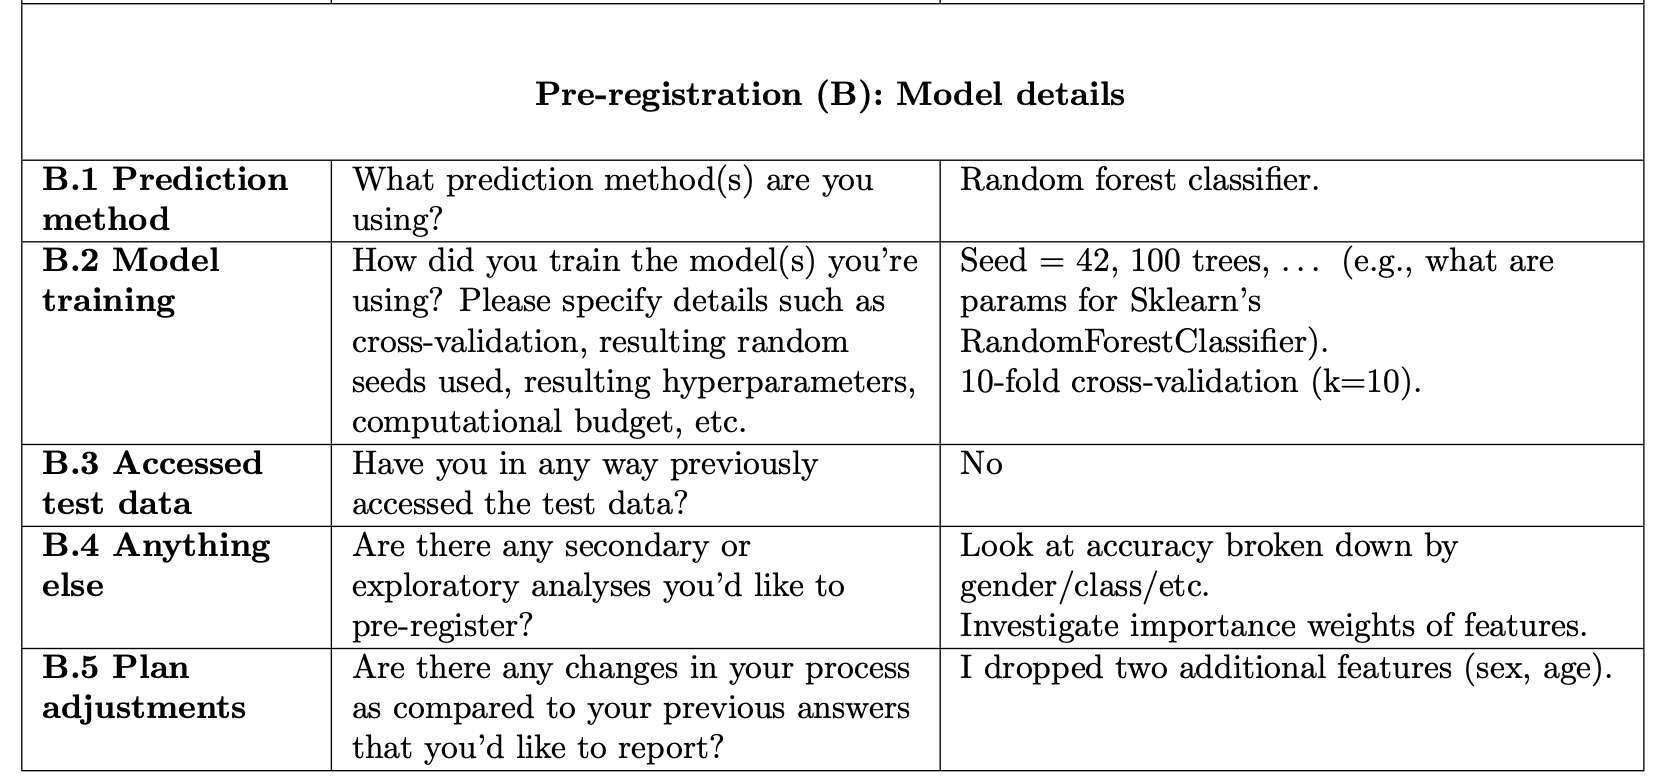 Hi, I'd like some help on modeling a prediction